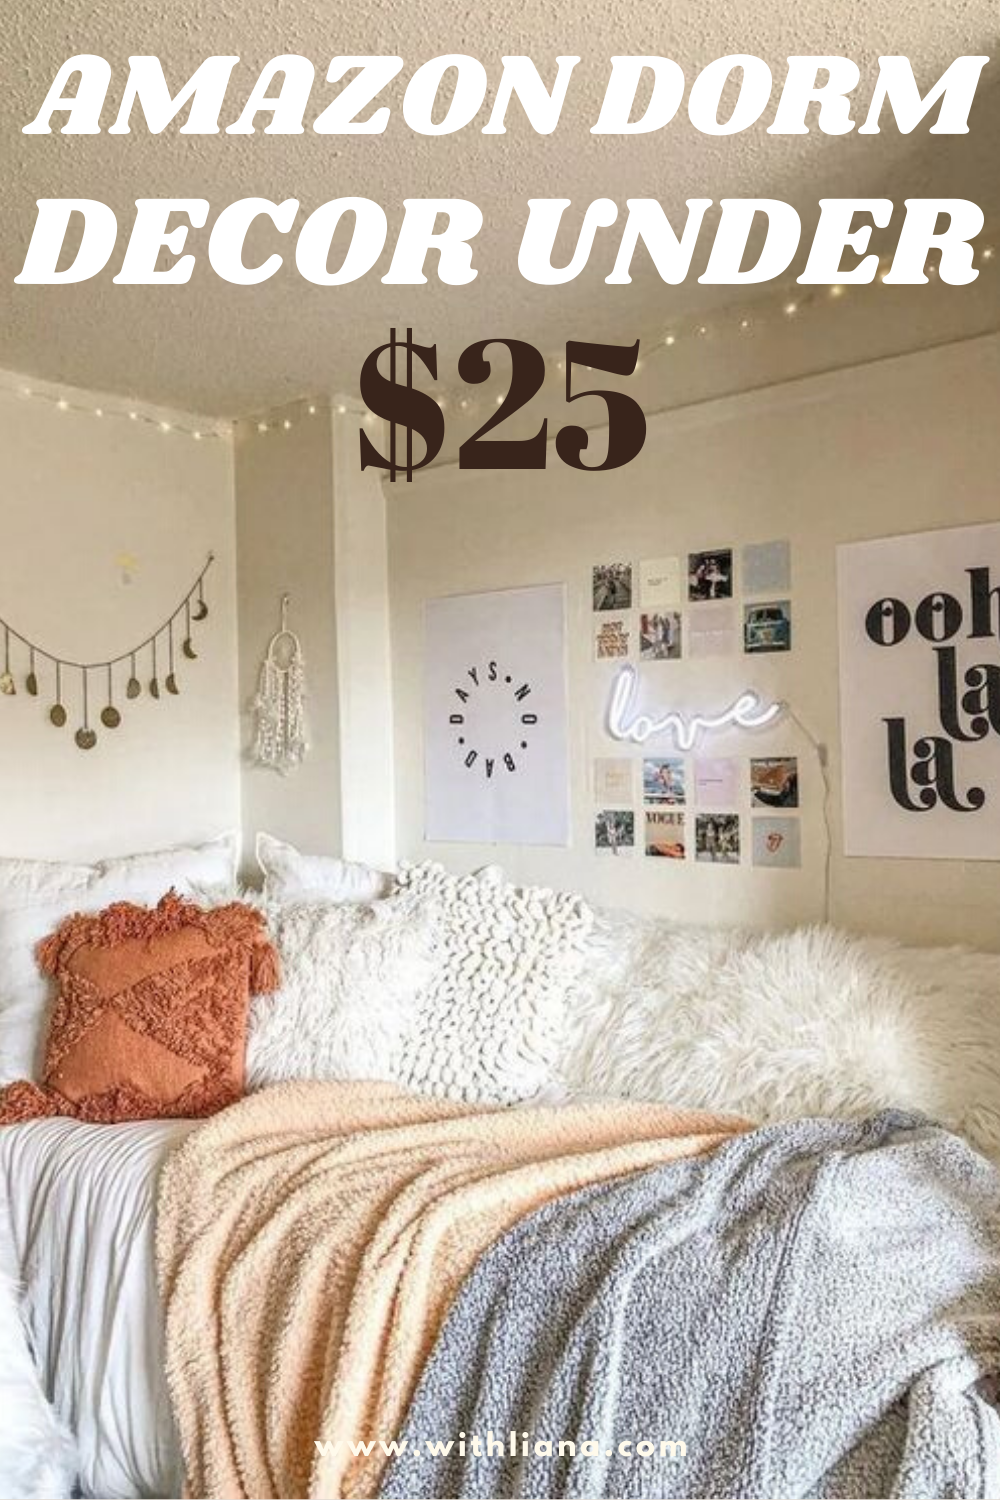 Amazon Dorm Decor Under $25 - Amazon Dorm Decor Under $25 -   diy Decorations college